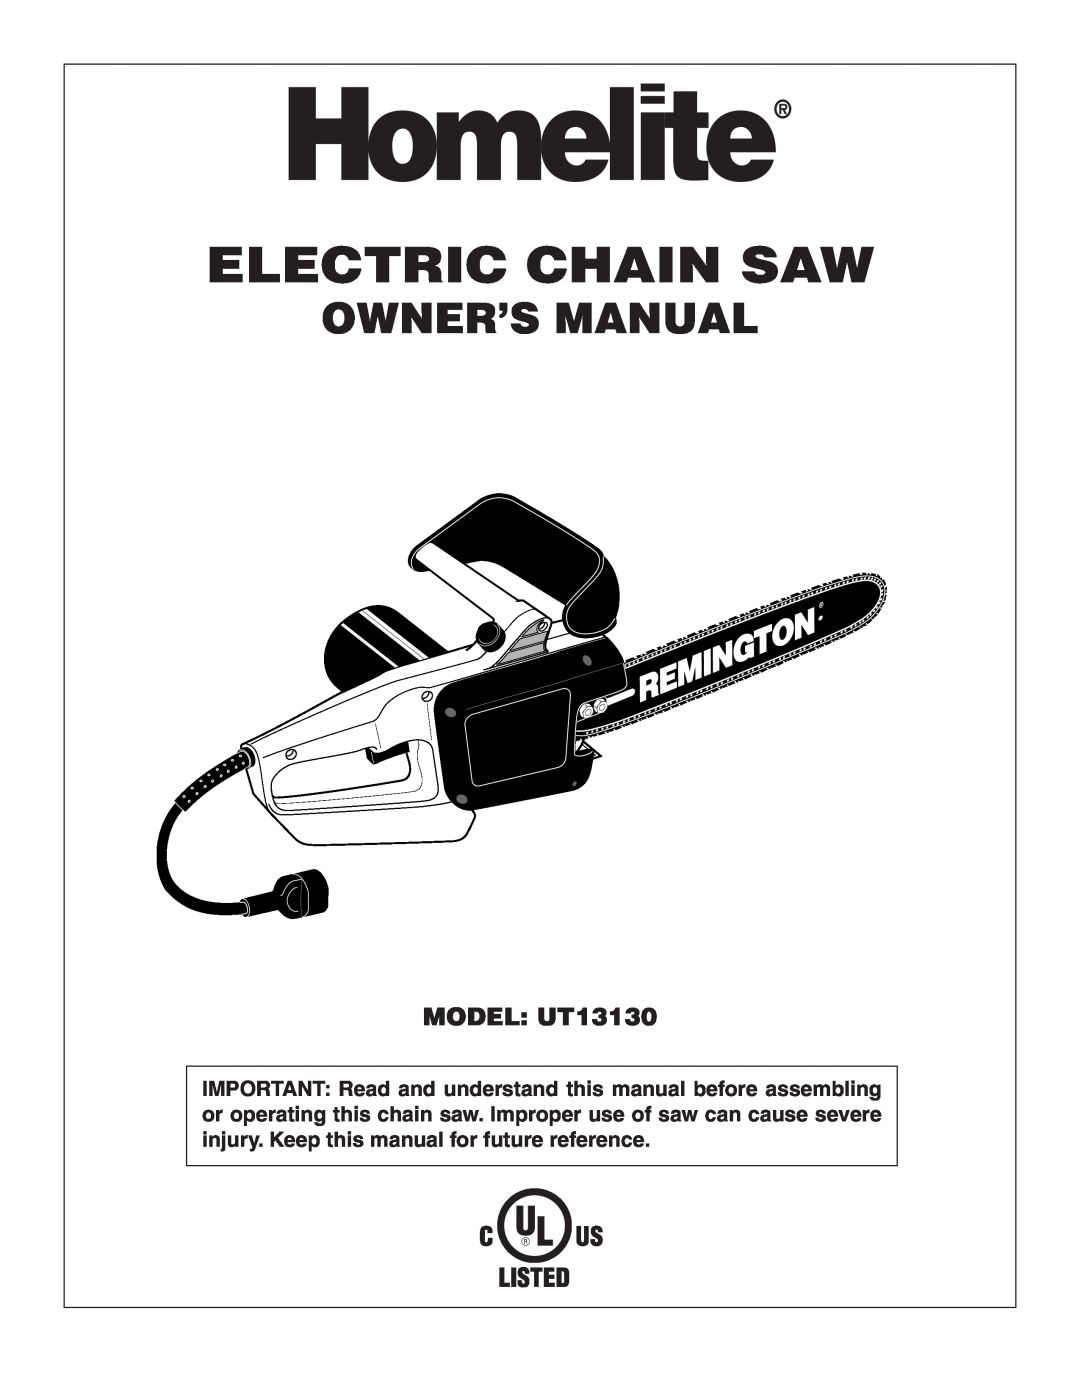 Homelite owner manual Electric Chain Saw, Model UT13130 